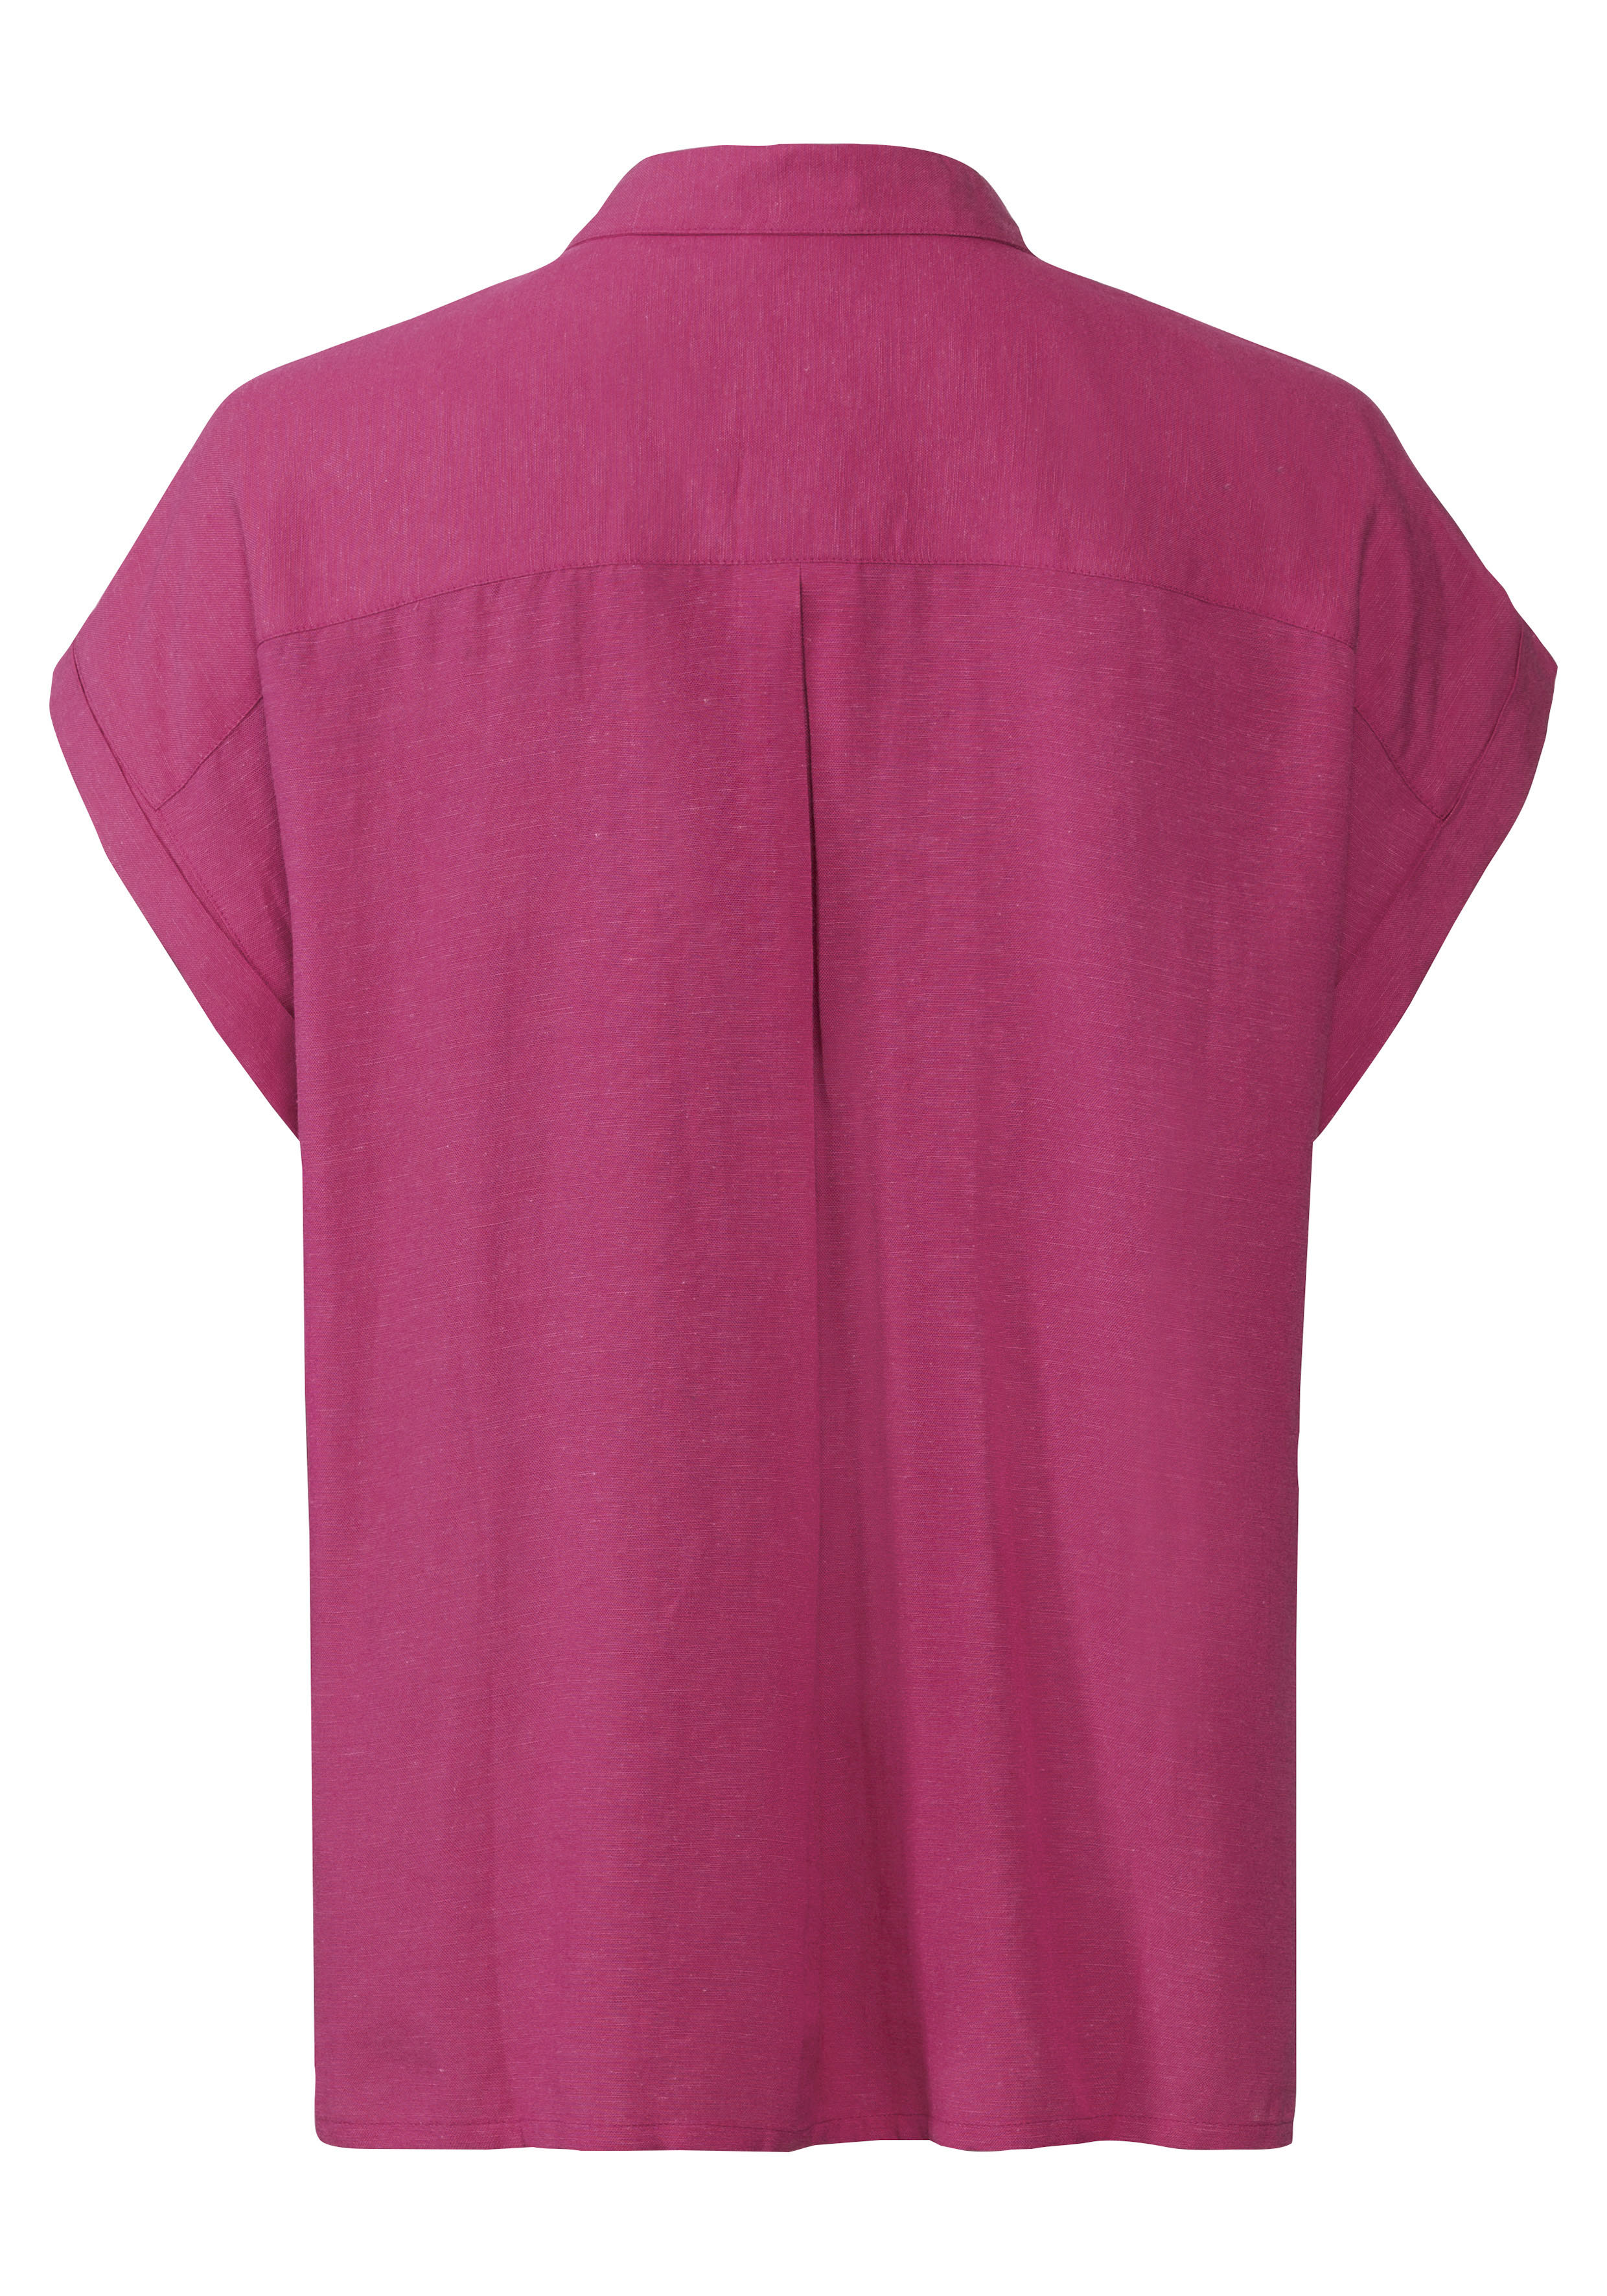 LASCANA Hemdbluse, aus Leinenmix mit Knopfleiste, Leinenbluse, Kurzarmbluse  » LASCANA | Bademode, Unterwäsche & Lingerie online kaufen